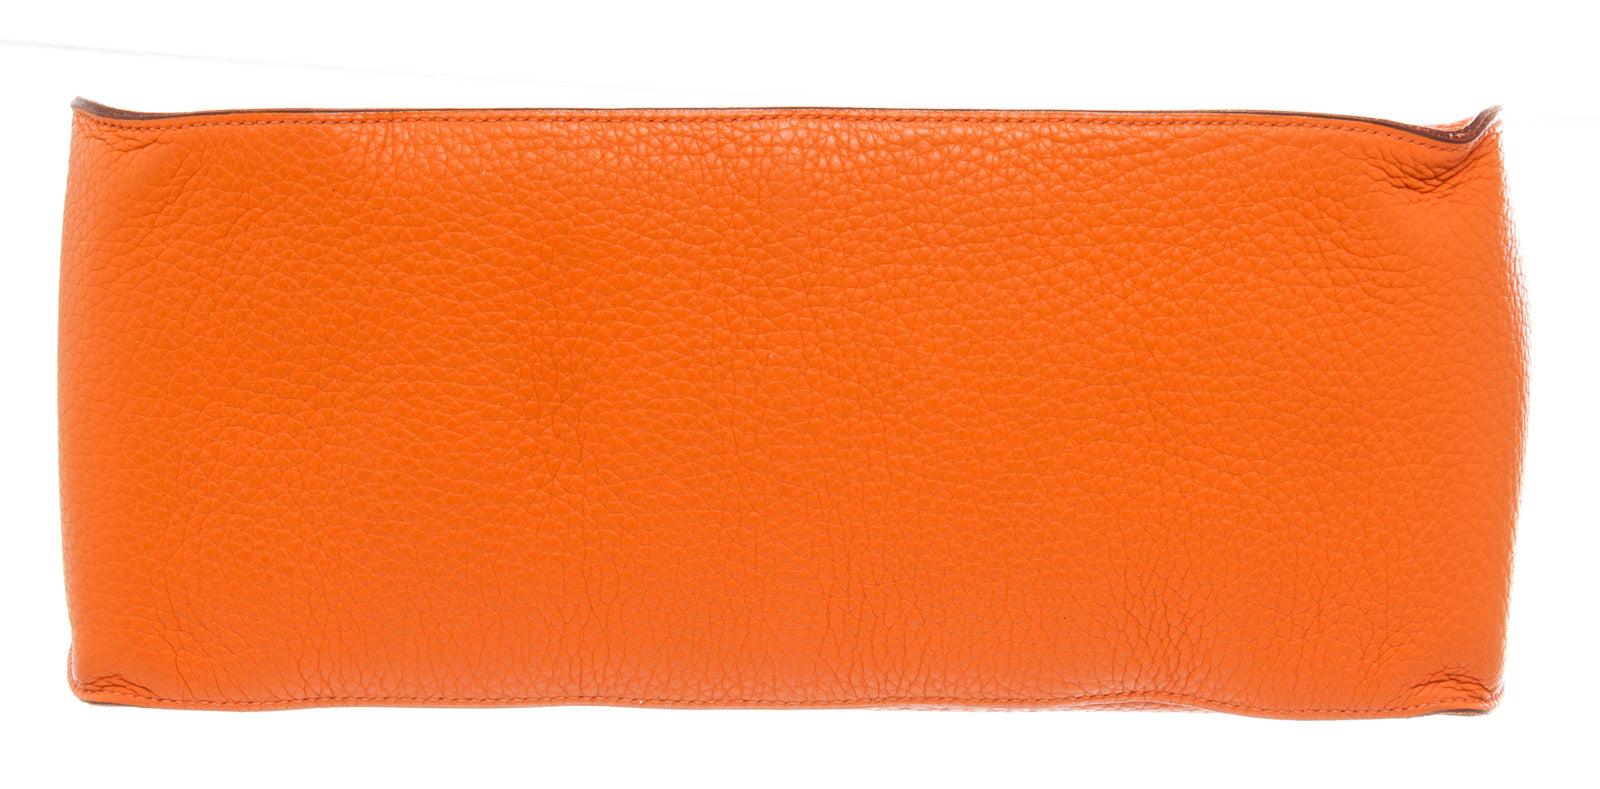 Hermes Jypsiere 37 Orange leather with palladium plated hardware, adjustable straps, turn lock closure, one interior zip pocket and two slip pockets, leather lining.

 

53589MSC